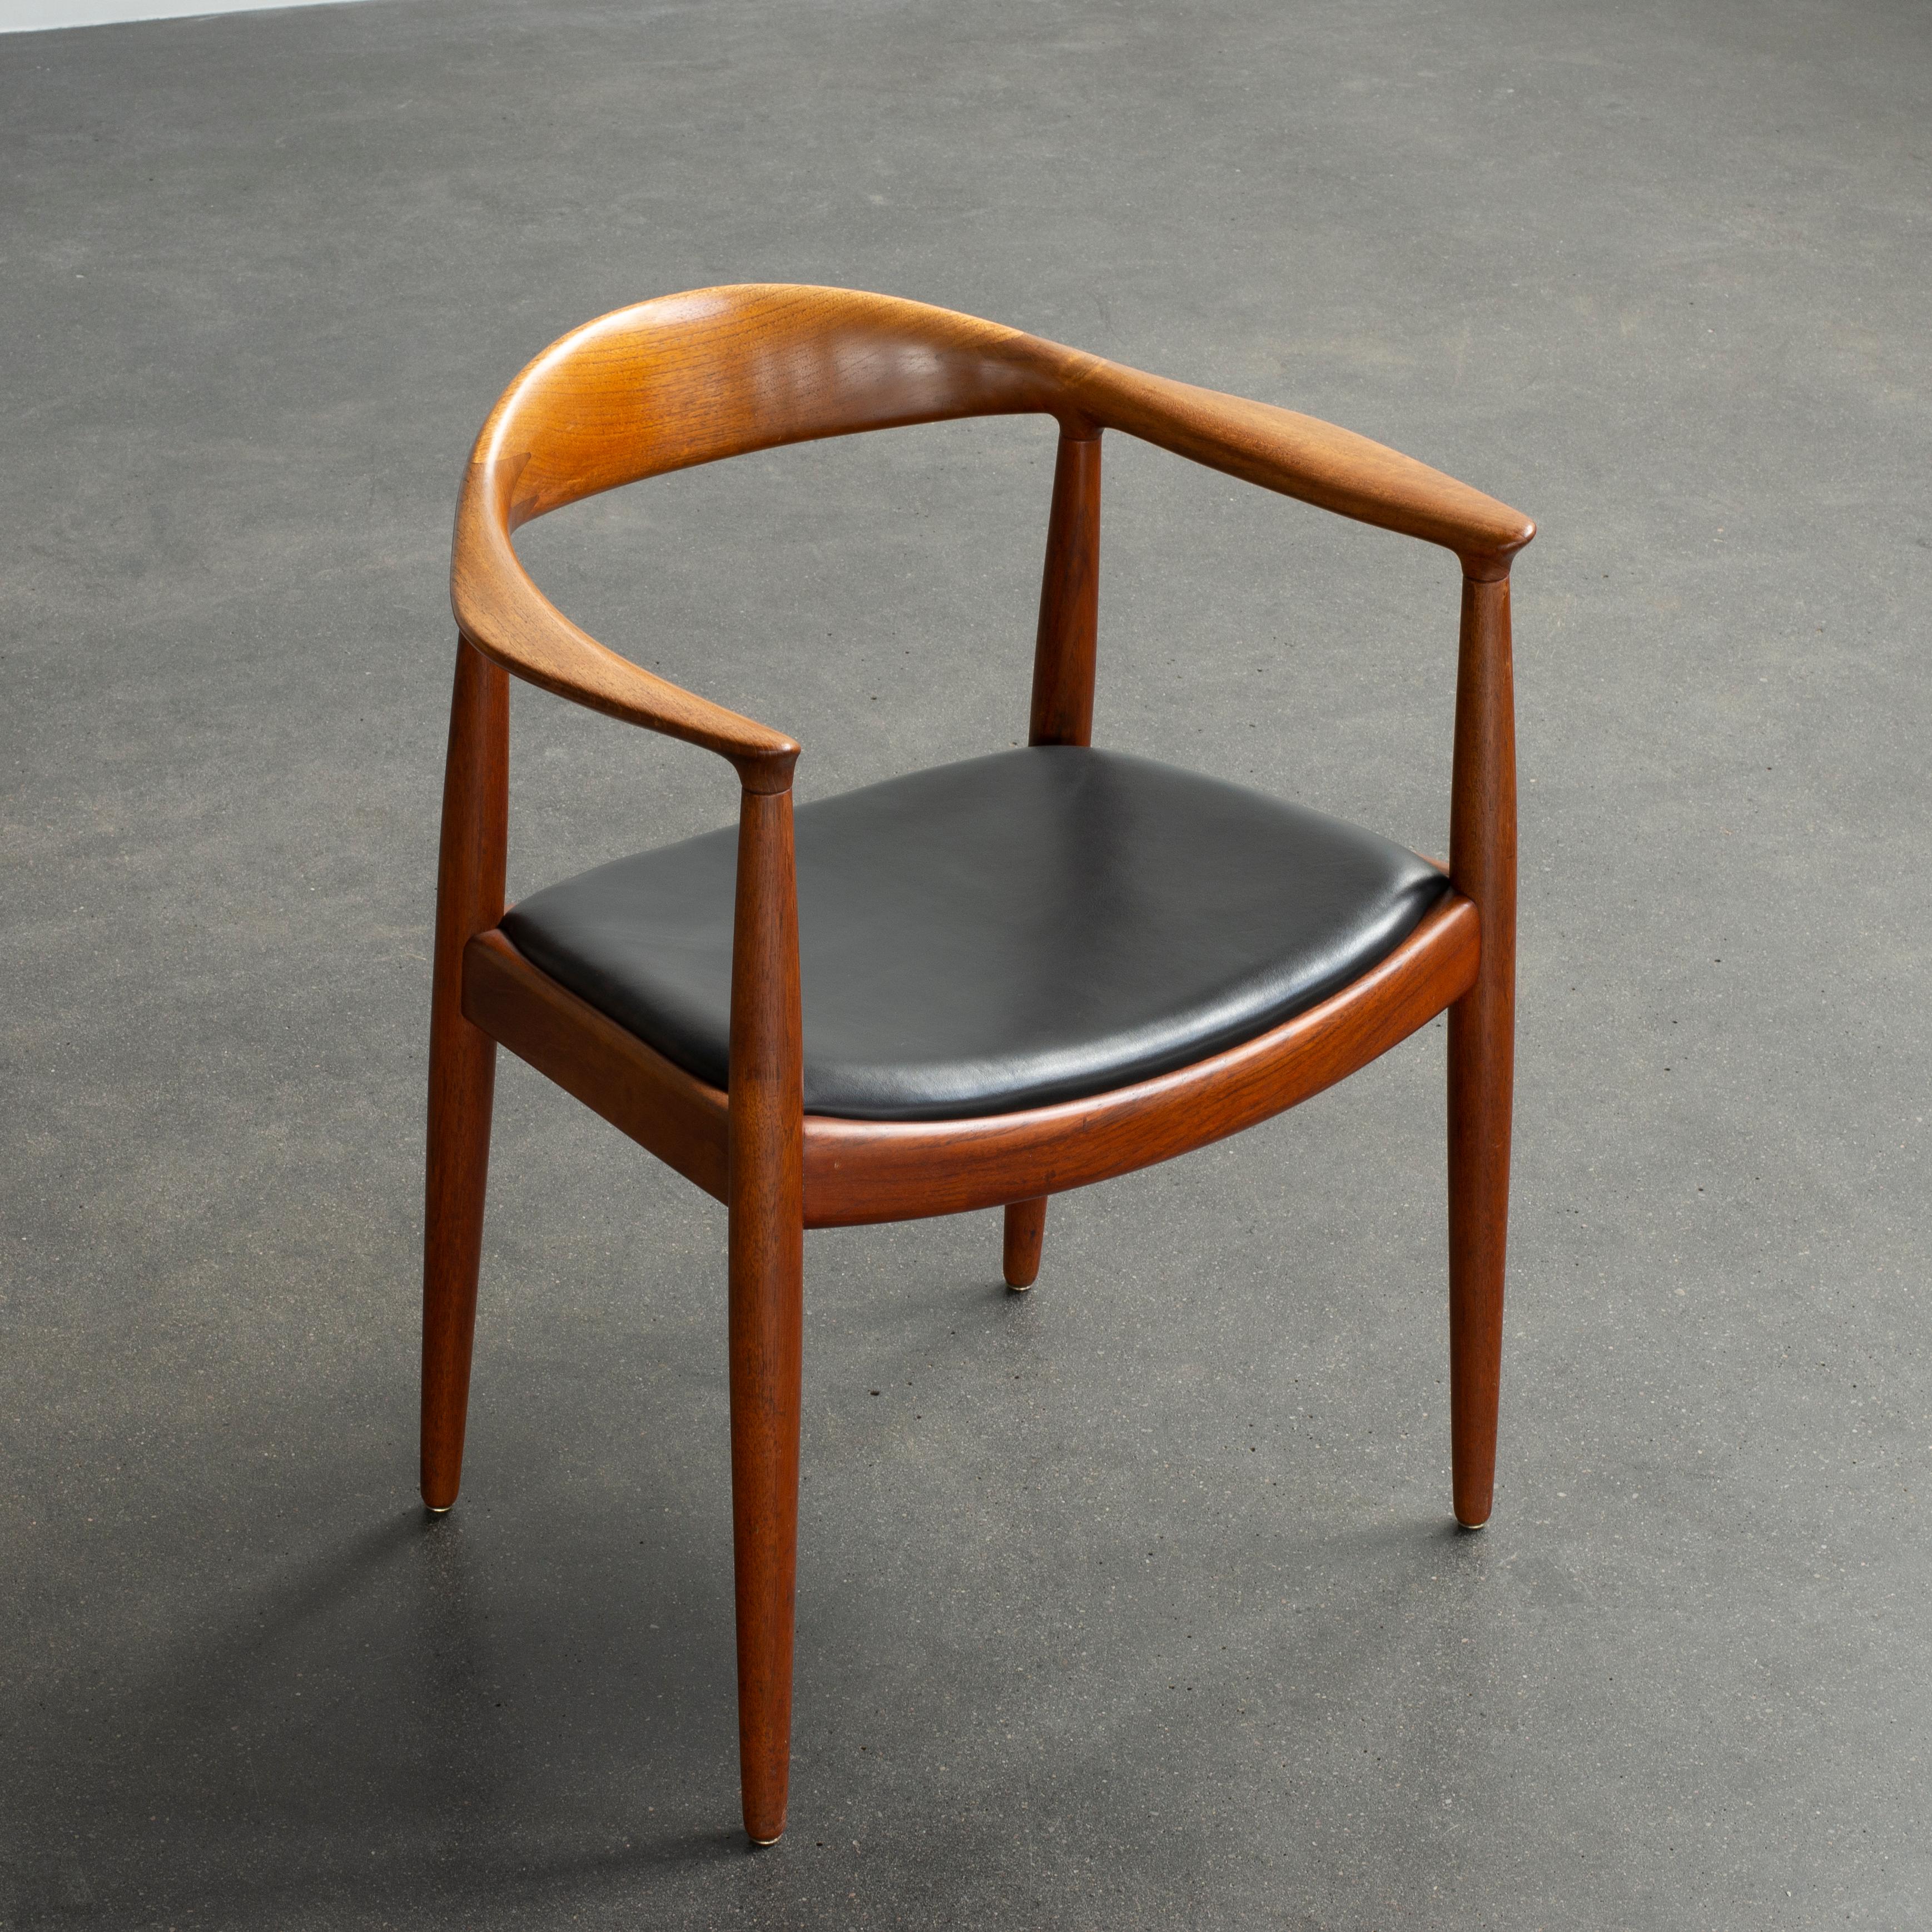 Hans J. Wegner 'The Chair' in Teak for Johannes Hansen In Good Condition For Sale In Copenhagen, DK